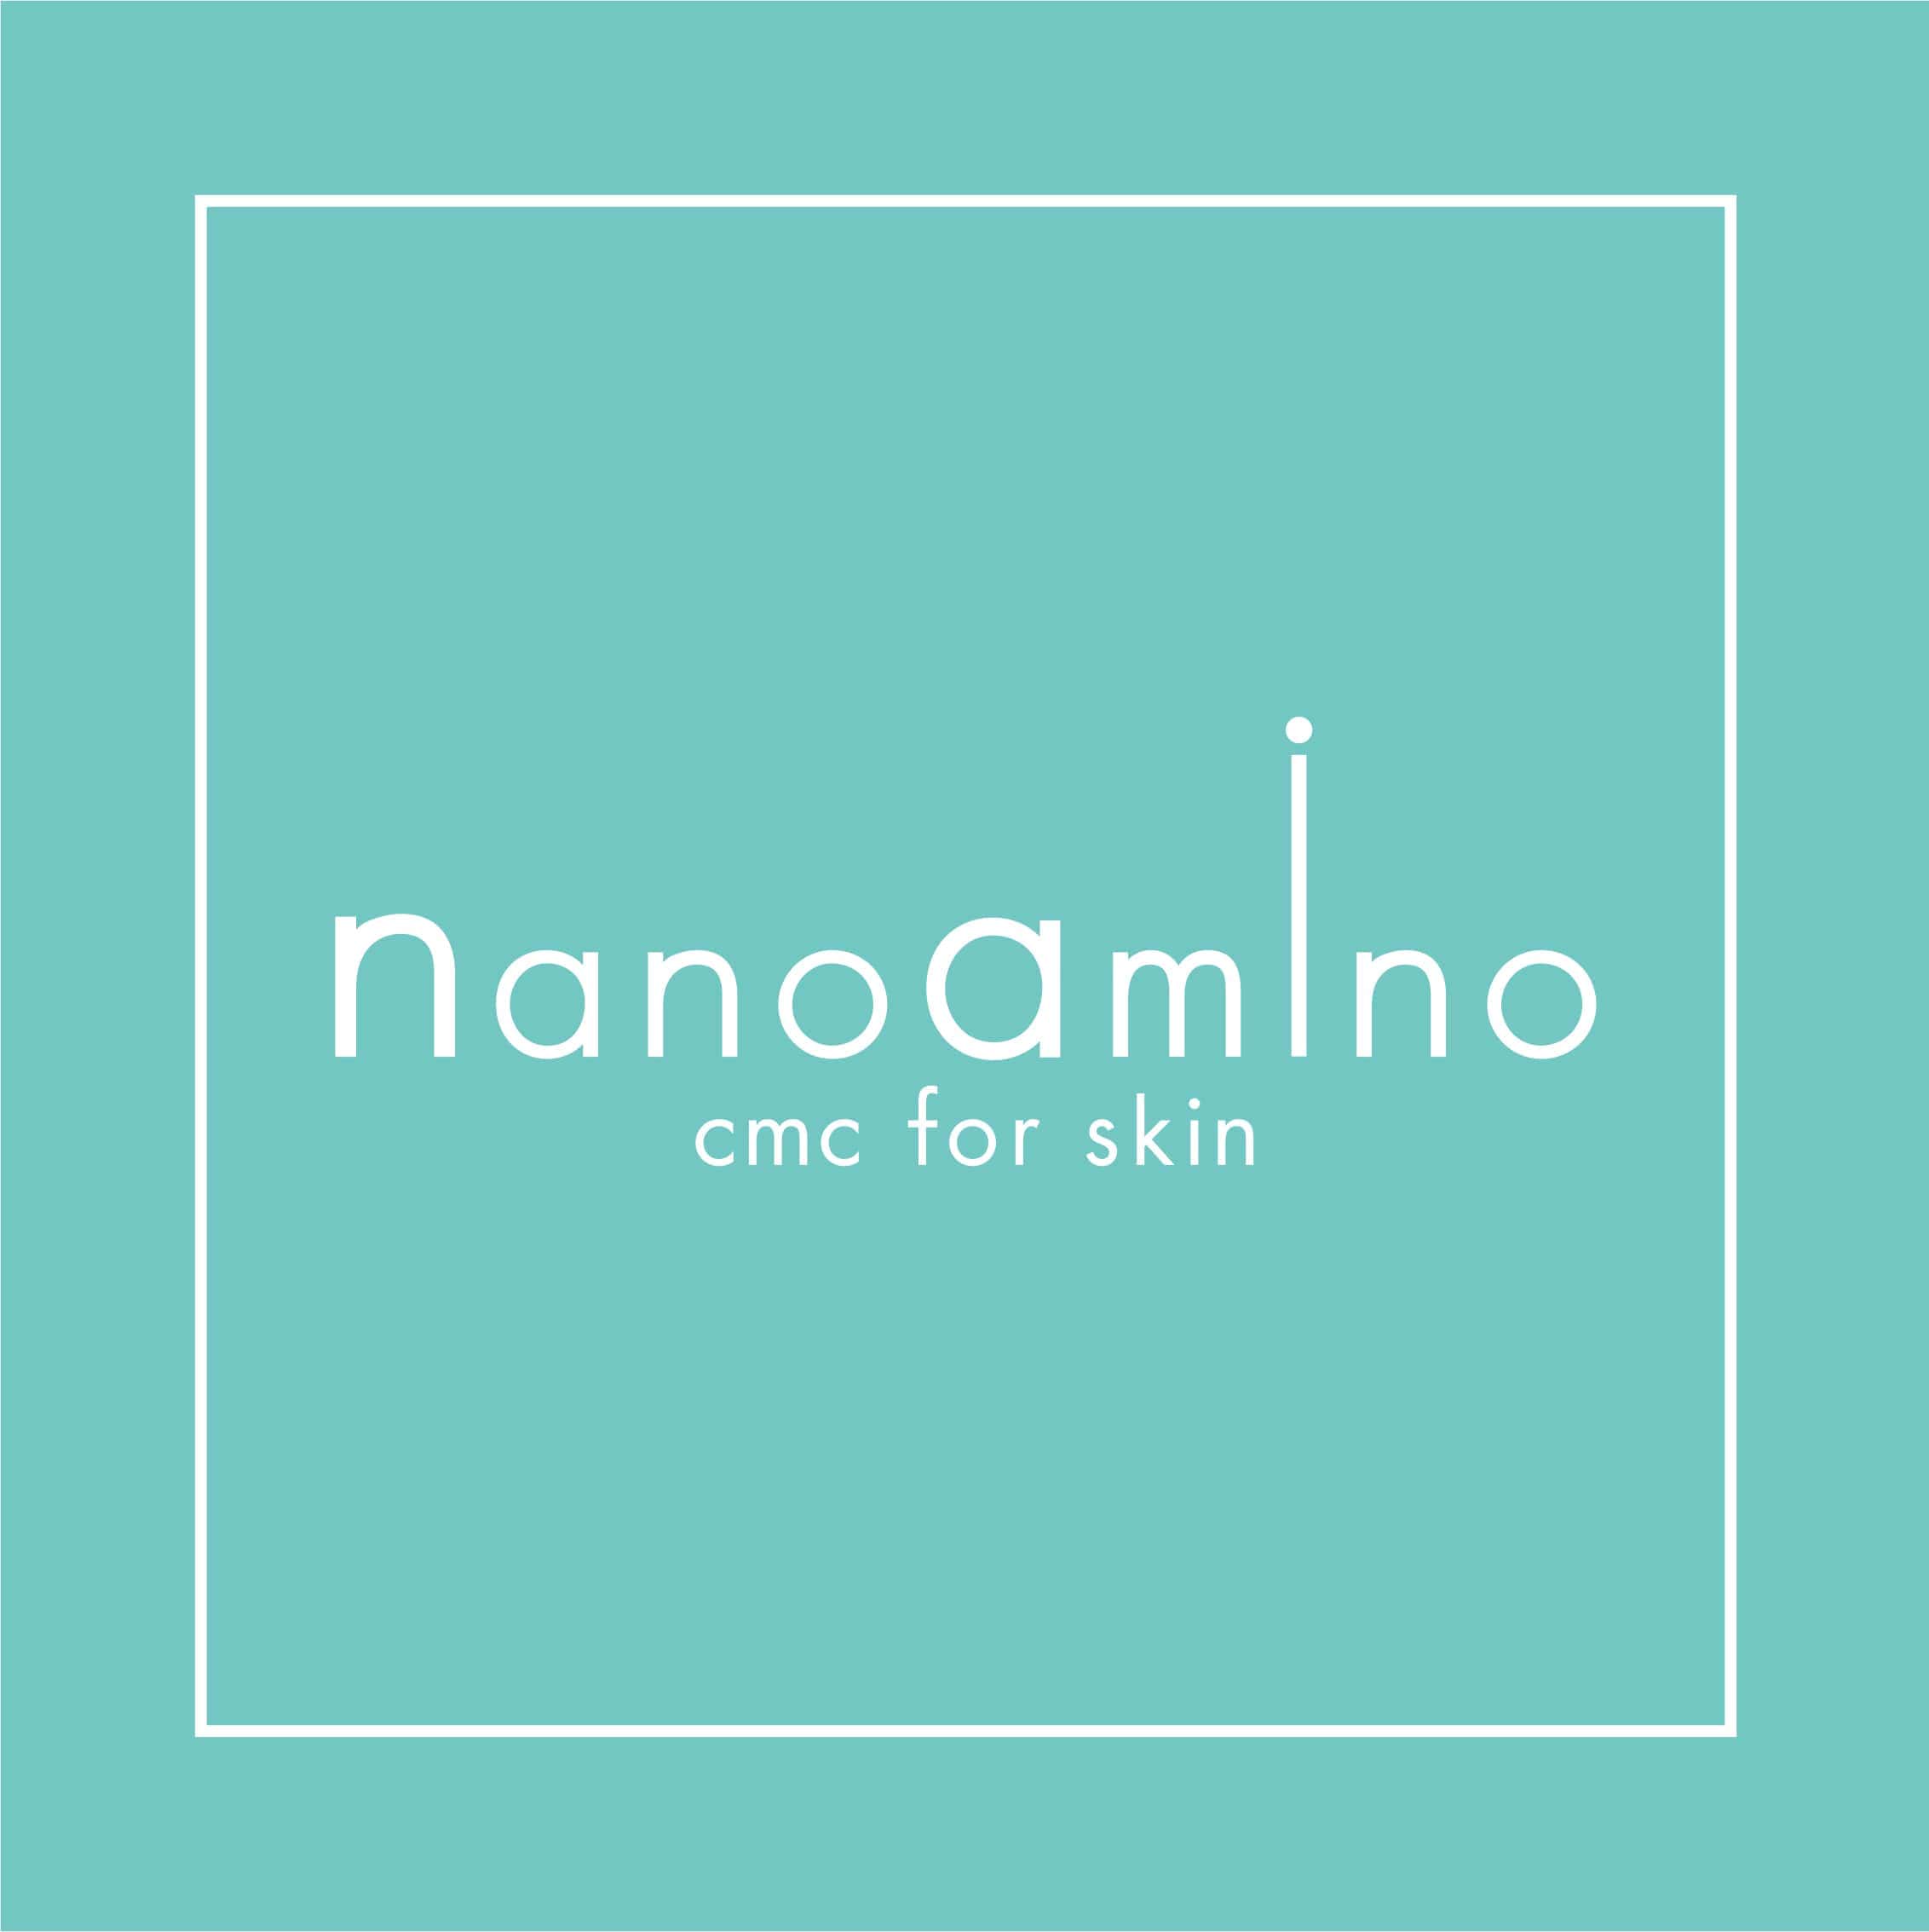 nanoamino cmc for skin